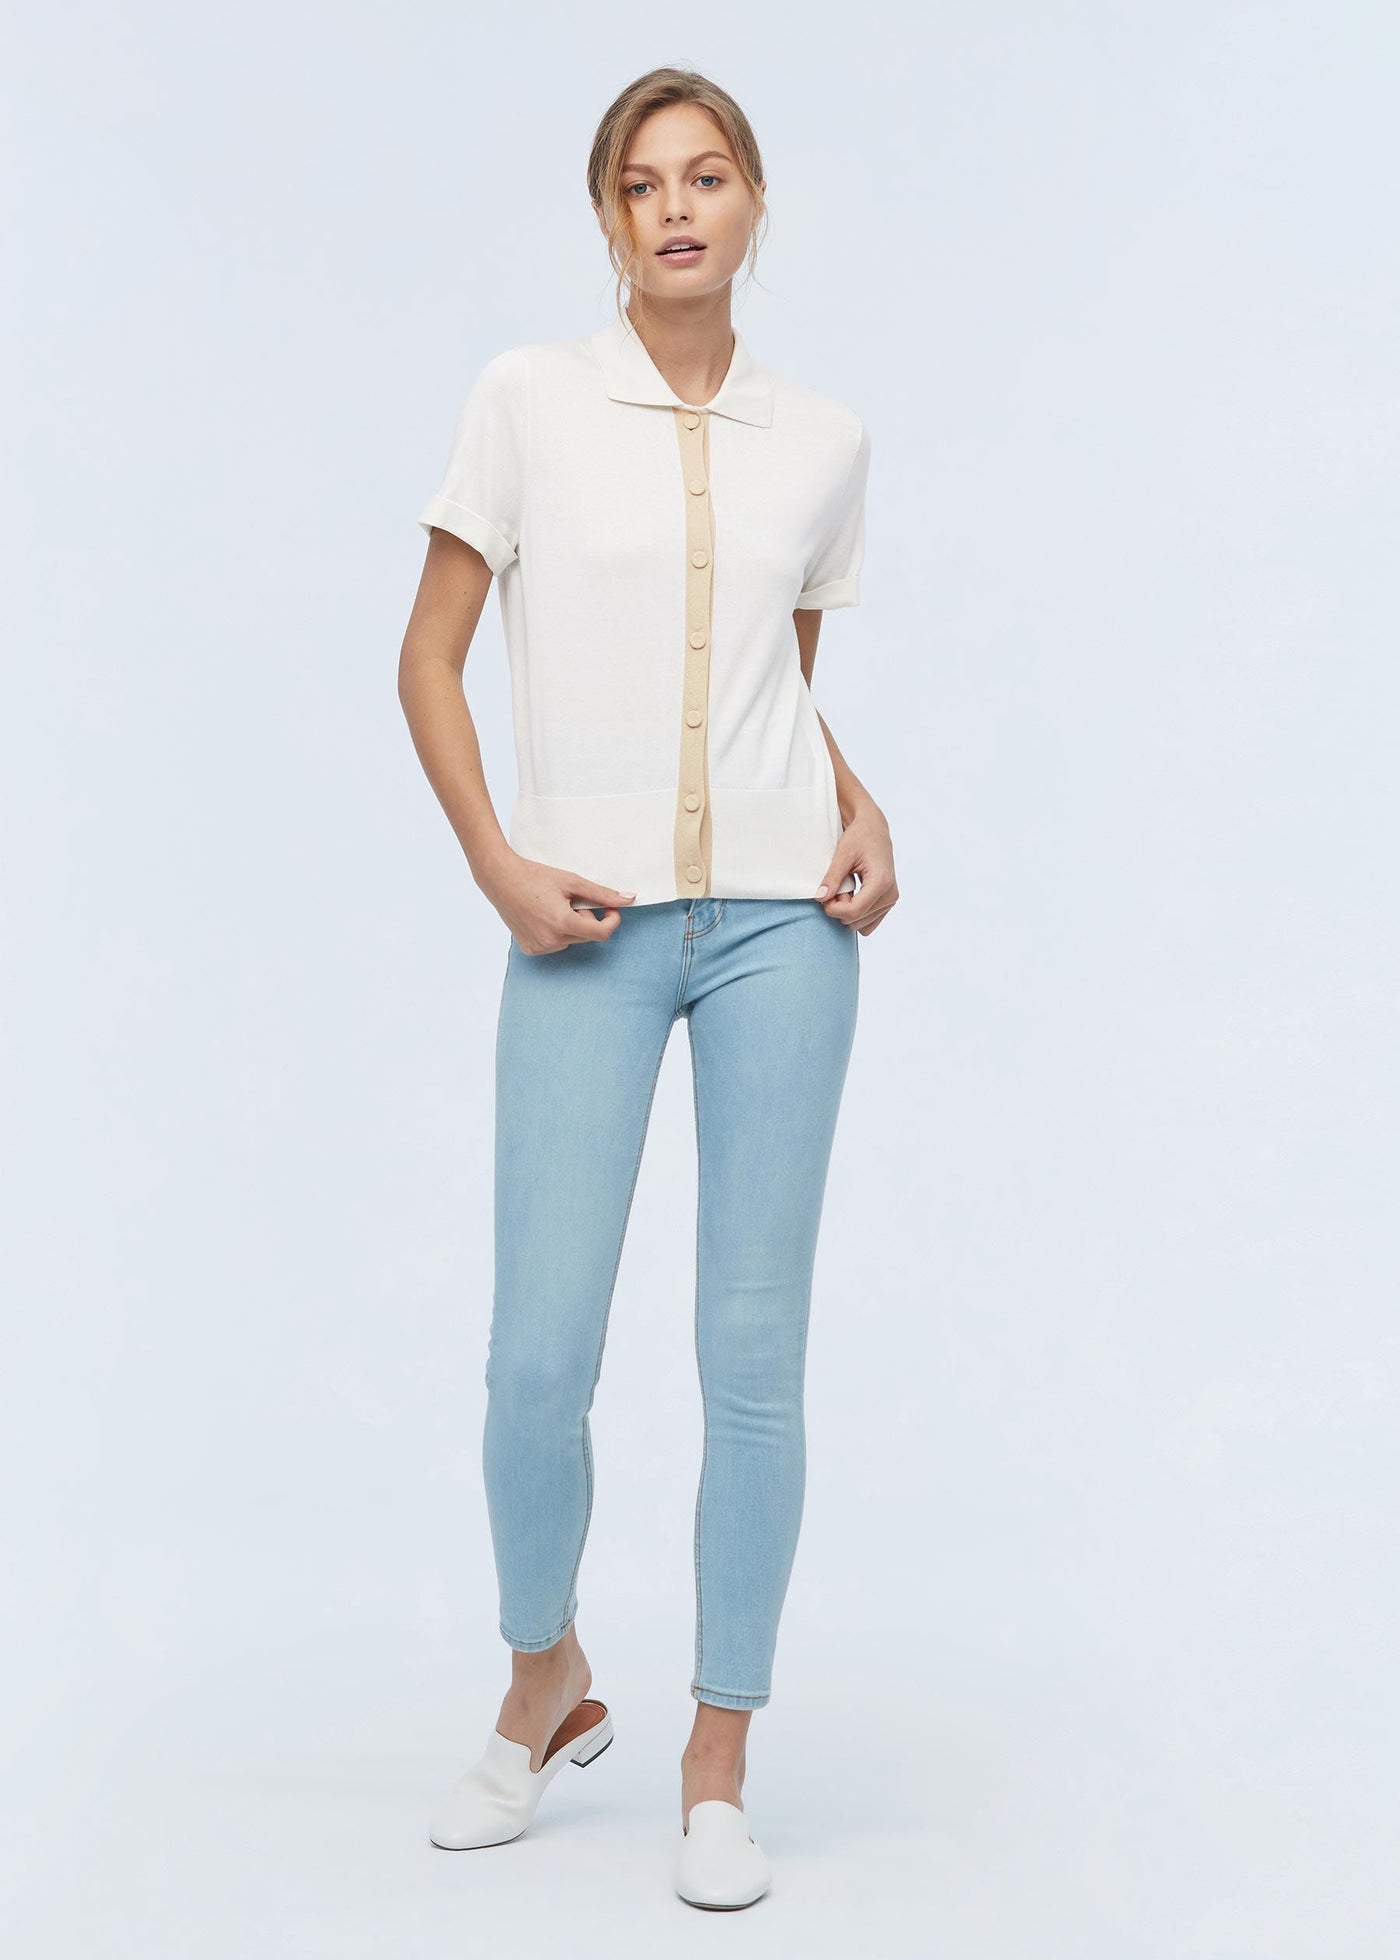 Shirt Collar Silk Knitted T shirt For Women Natural White LILYSILK Factory